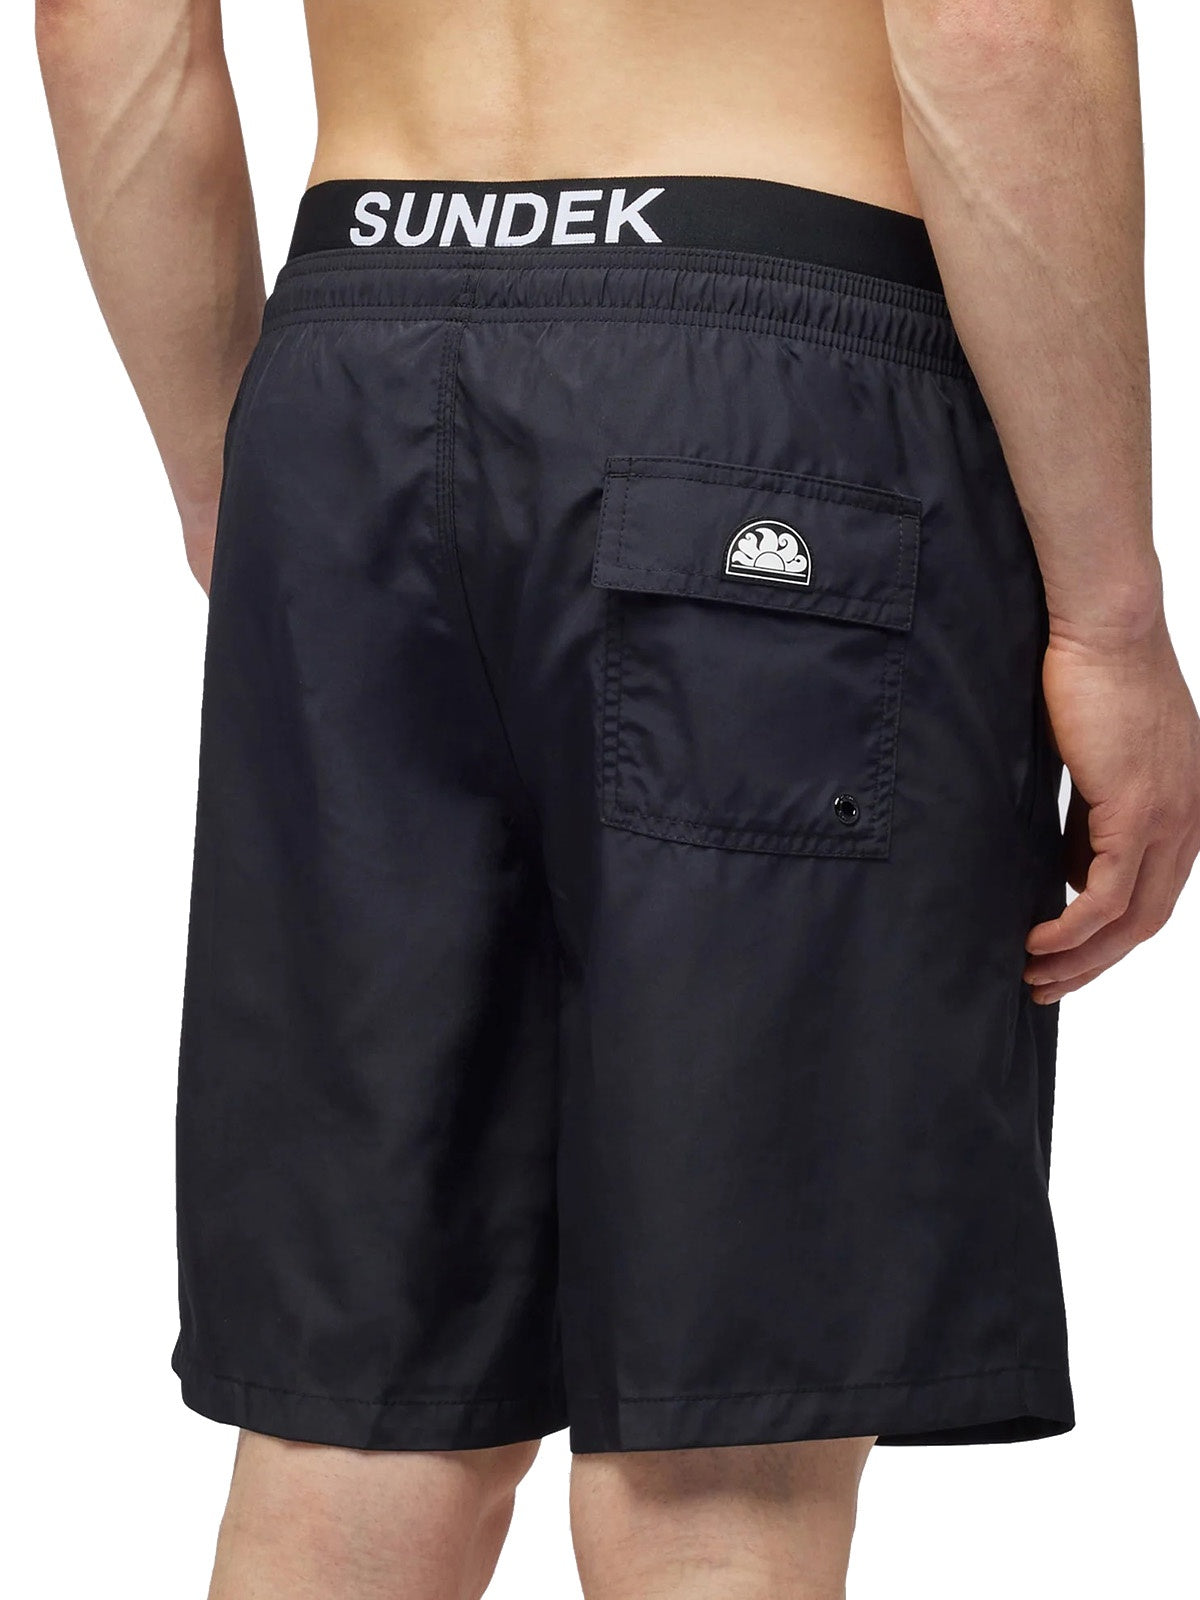 Pantaloncini e calzoncini Uomo Sundek - Costume Da Bagno Vita Elasticata Con Elastico Logo - Nero